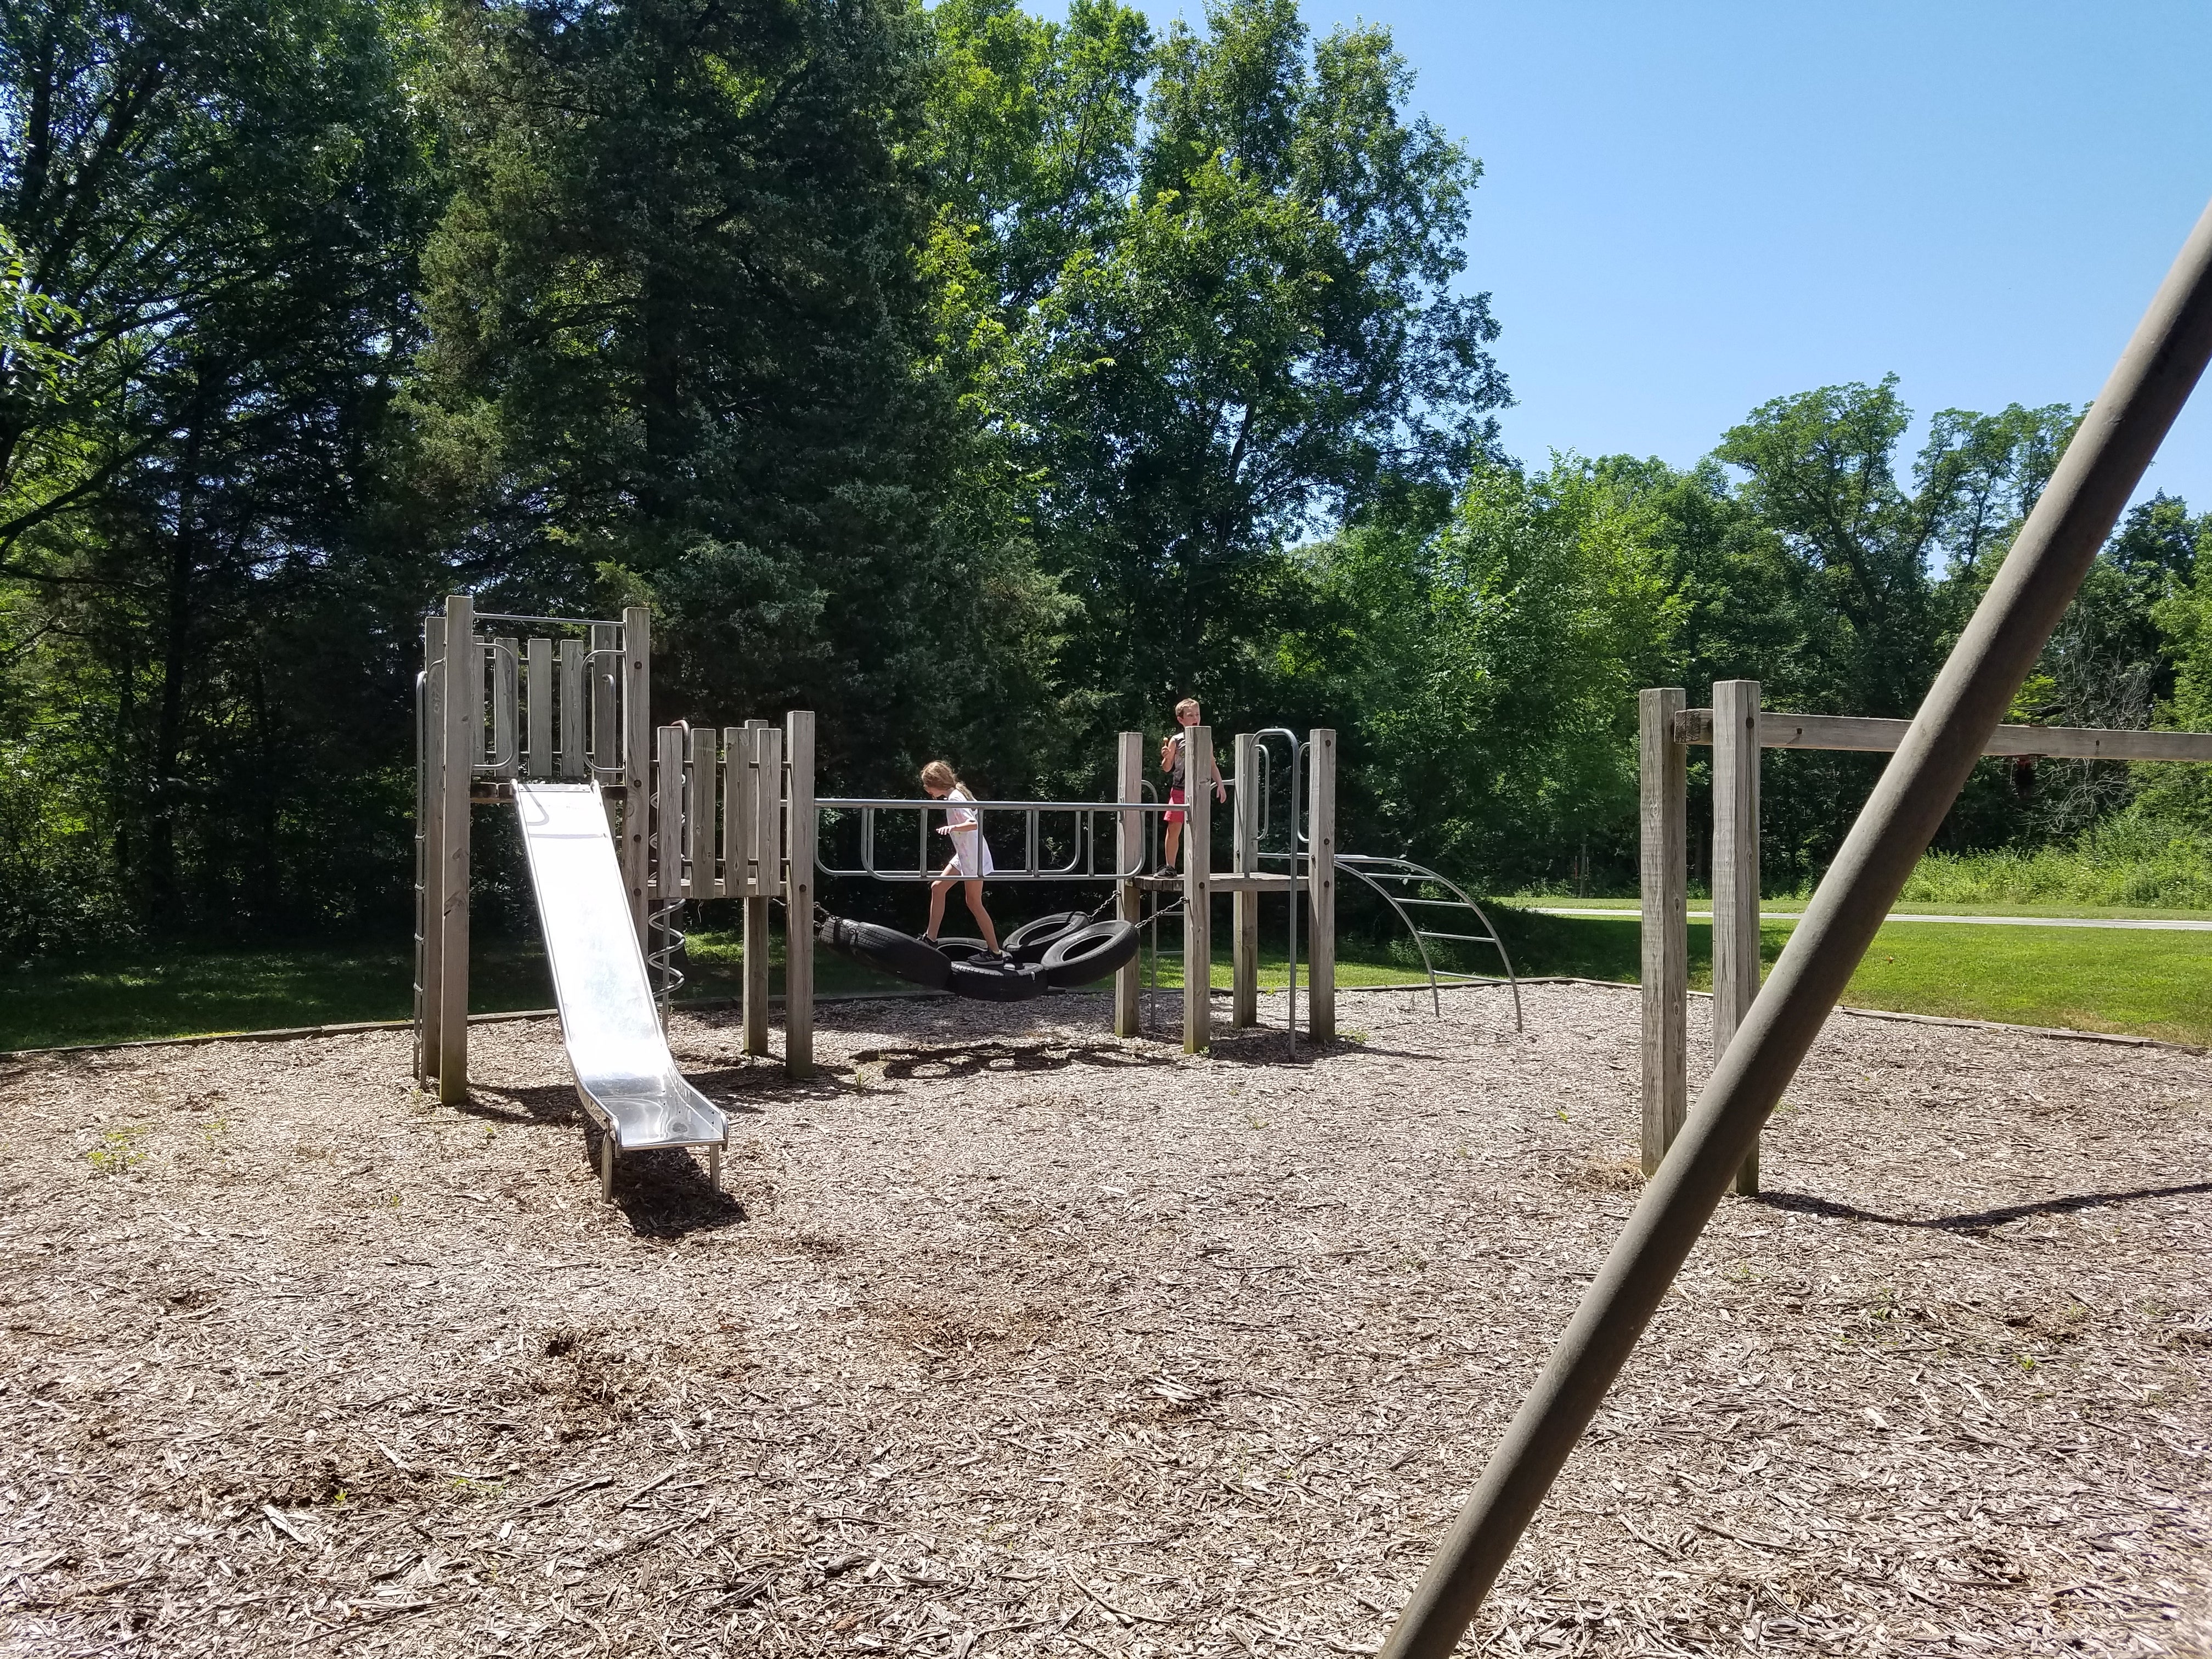 The playground near Lone Cedar